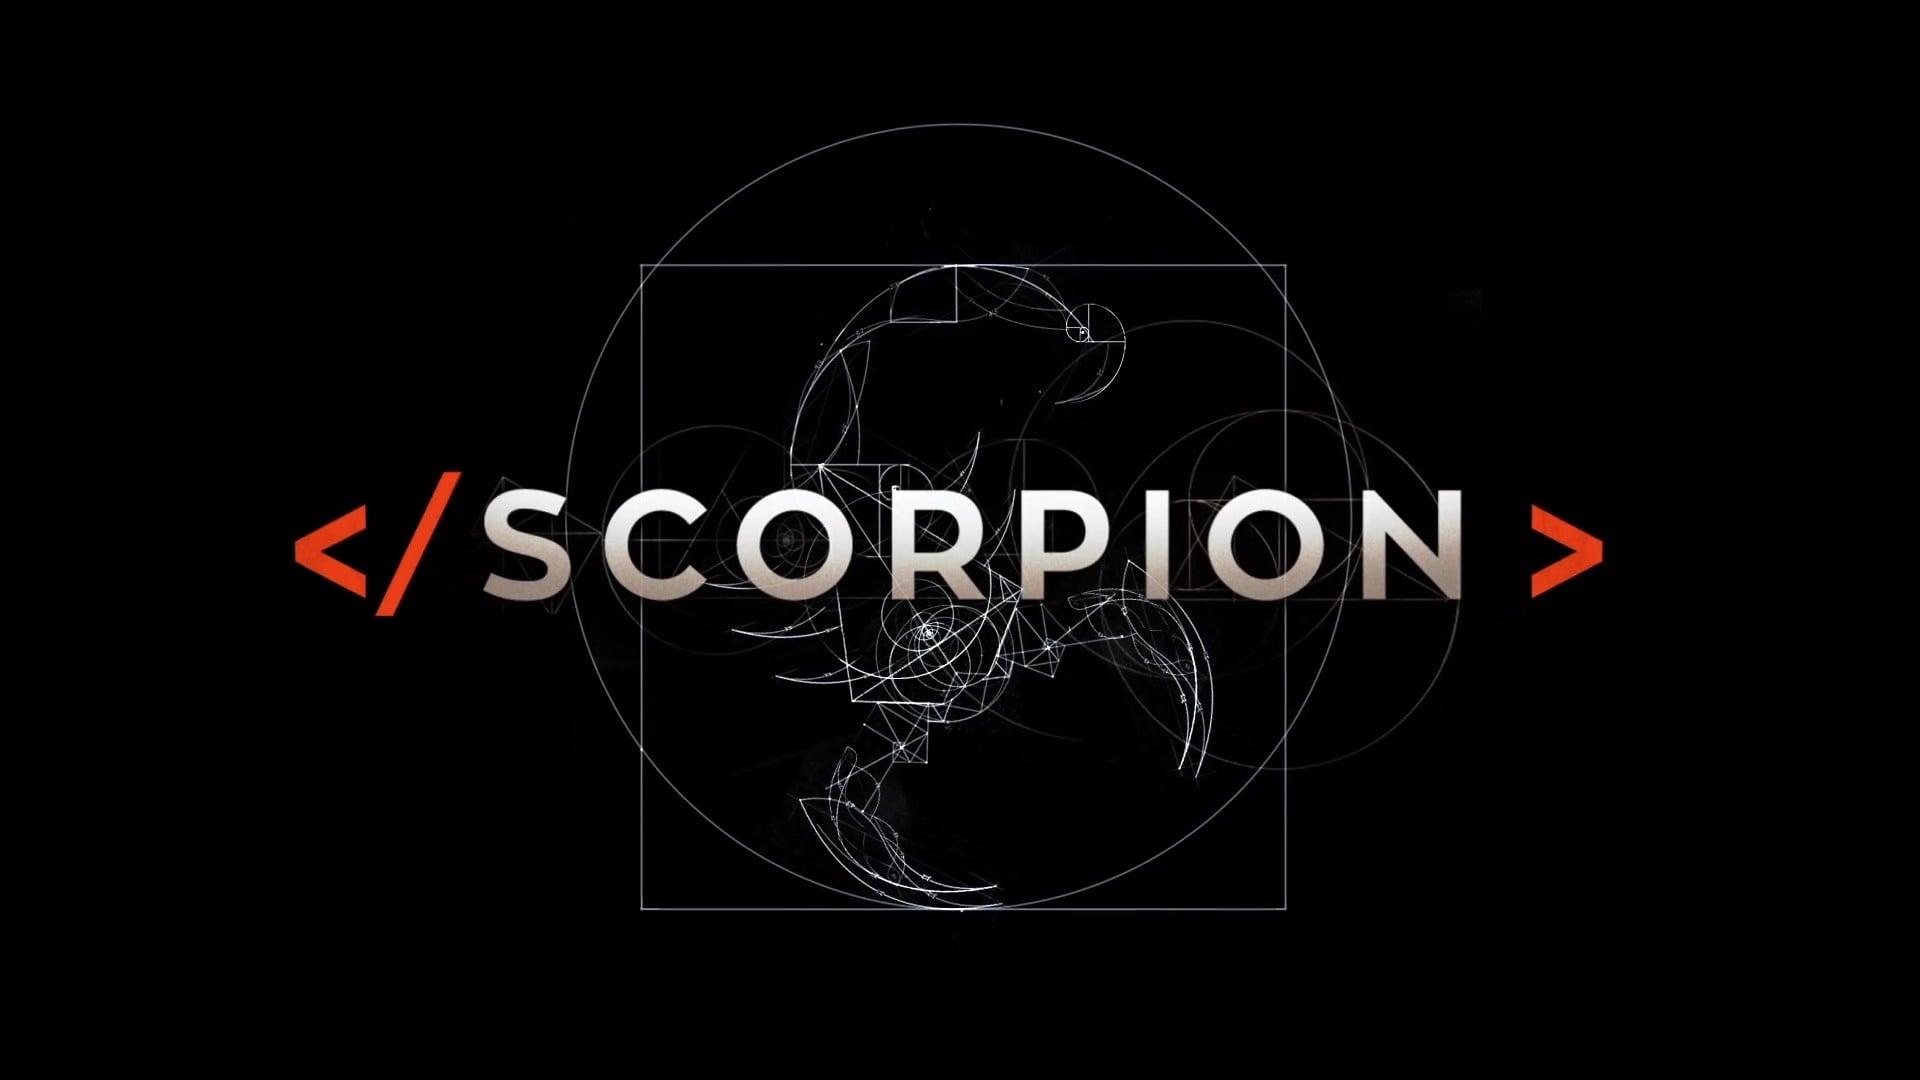 Scorpion Wallpaper HD. (37++ Wallpaper)